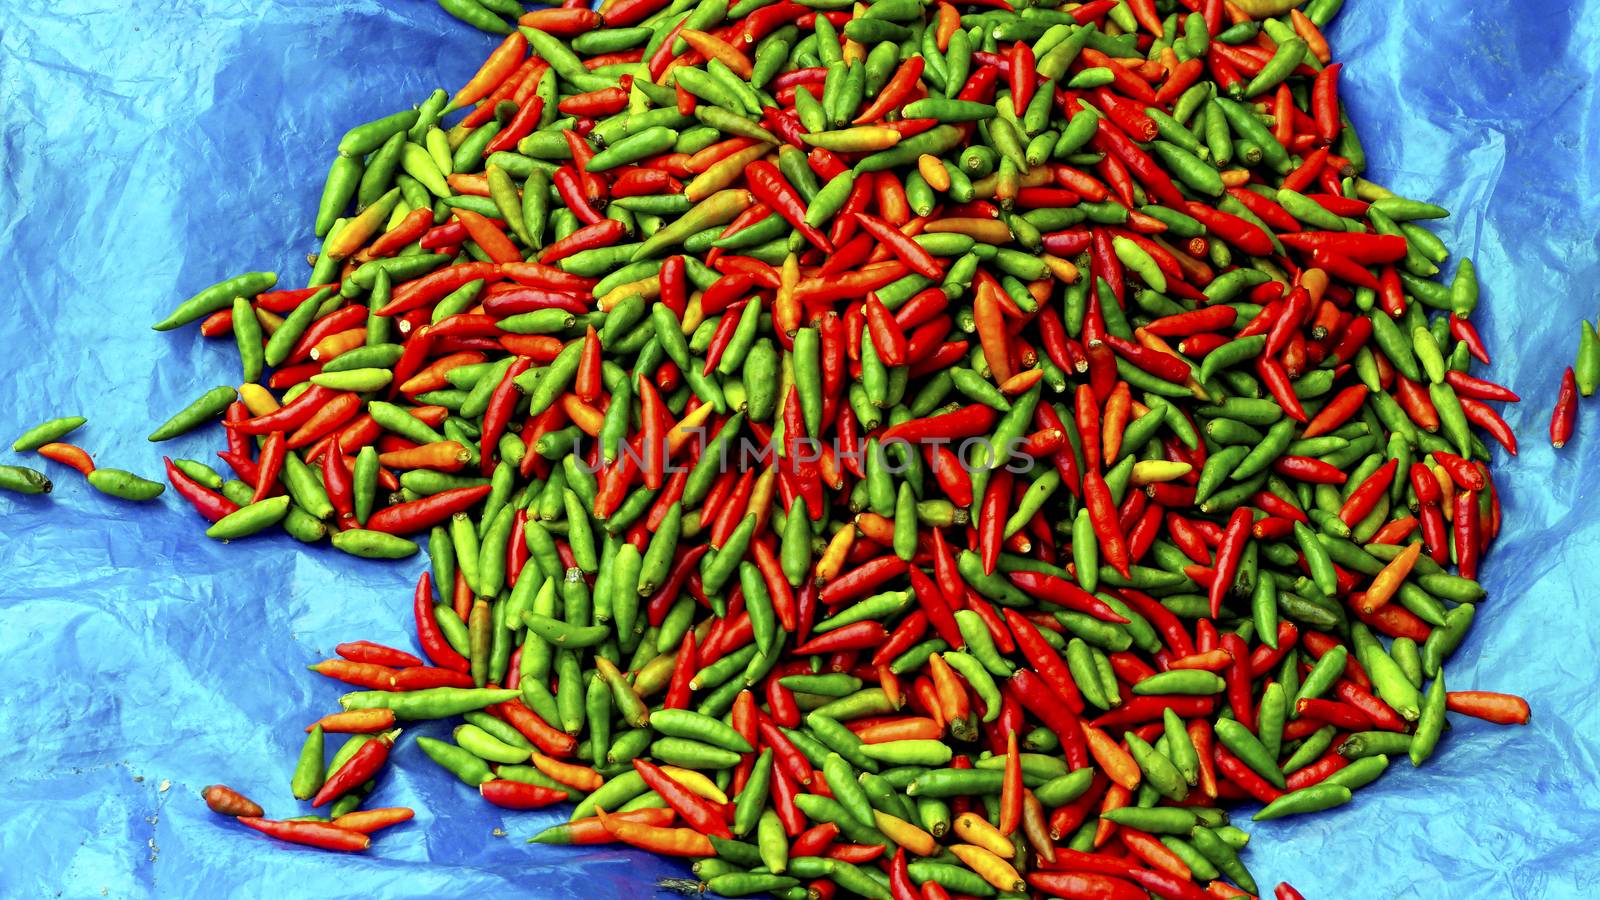 Fresh chili organic vegetables market by polarbearstudio